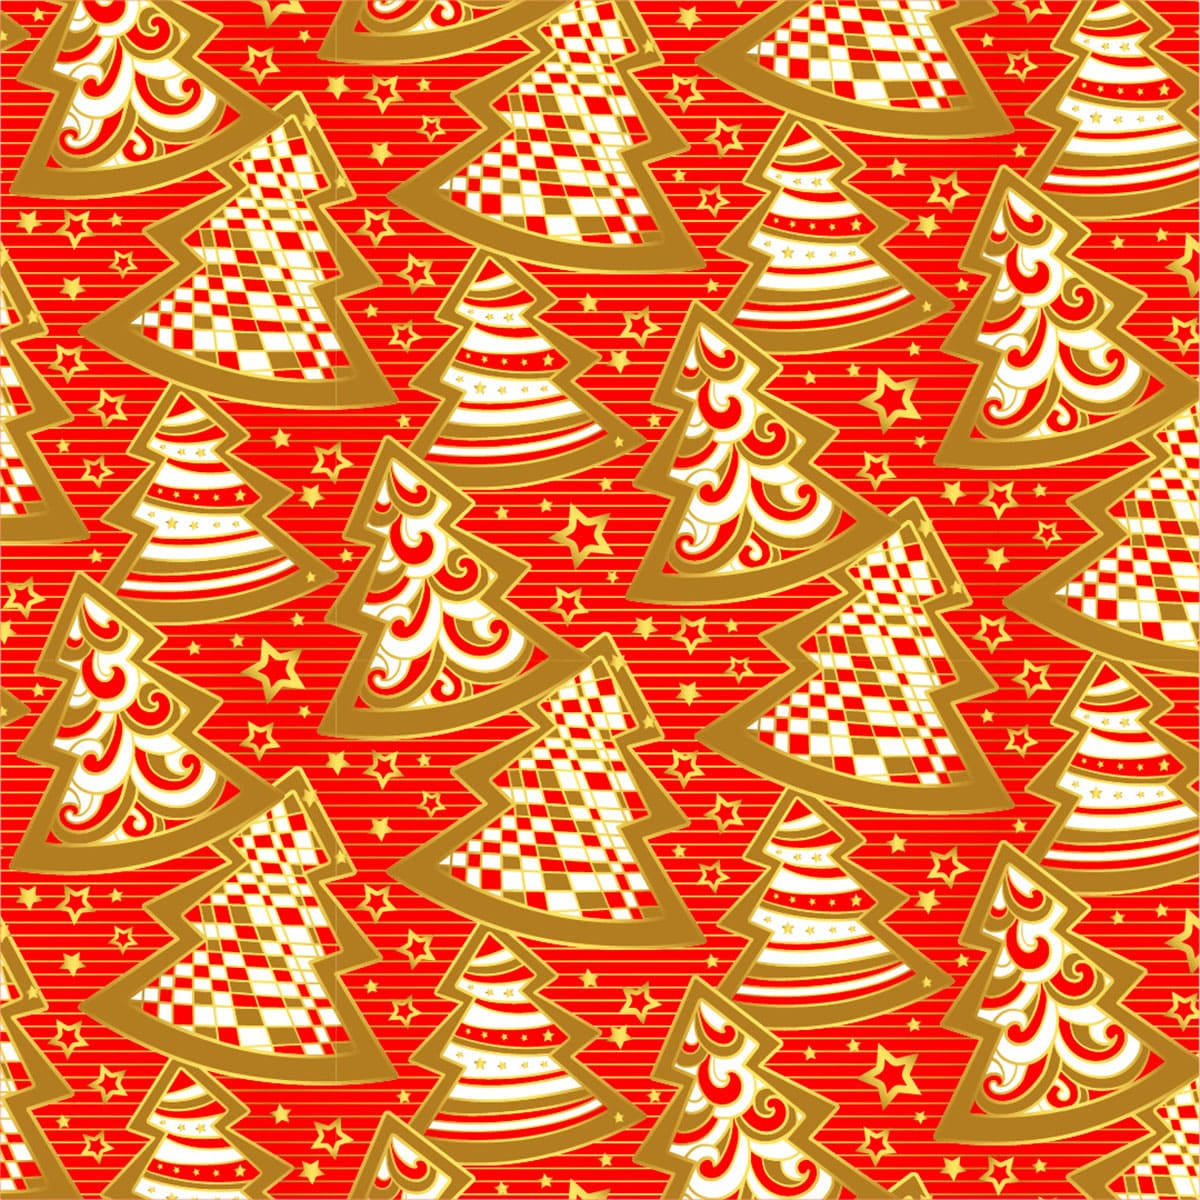 Seamless Christmas pattern Christmas trees